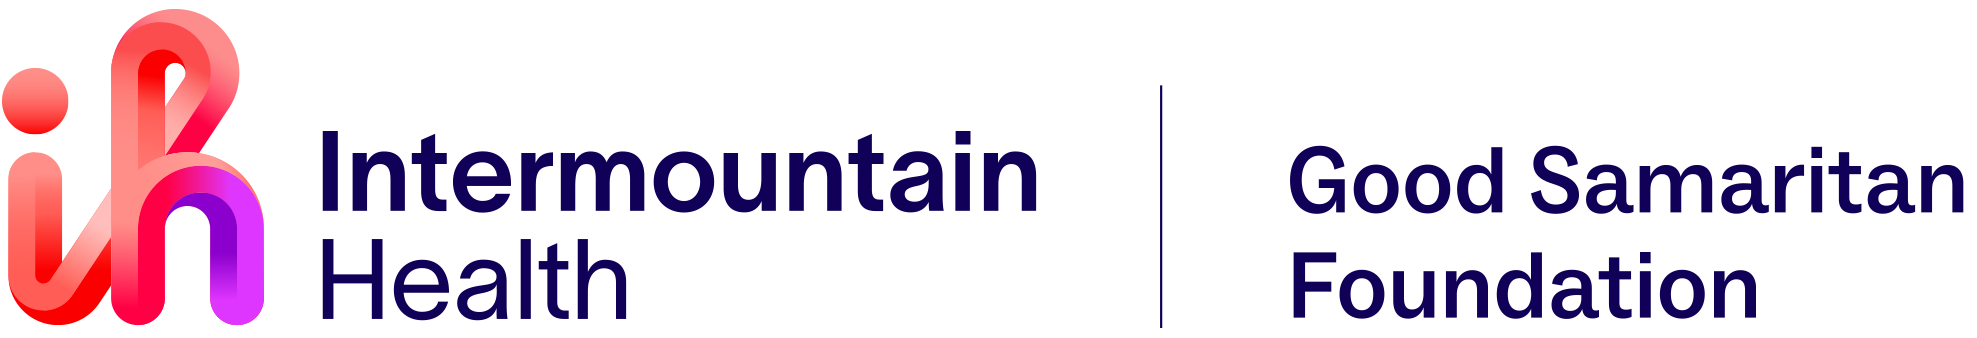 Intermountain Good Samaritan Foundation logo